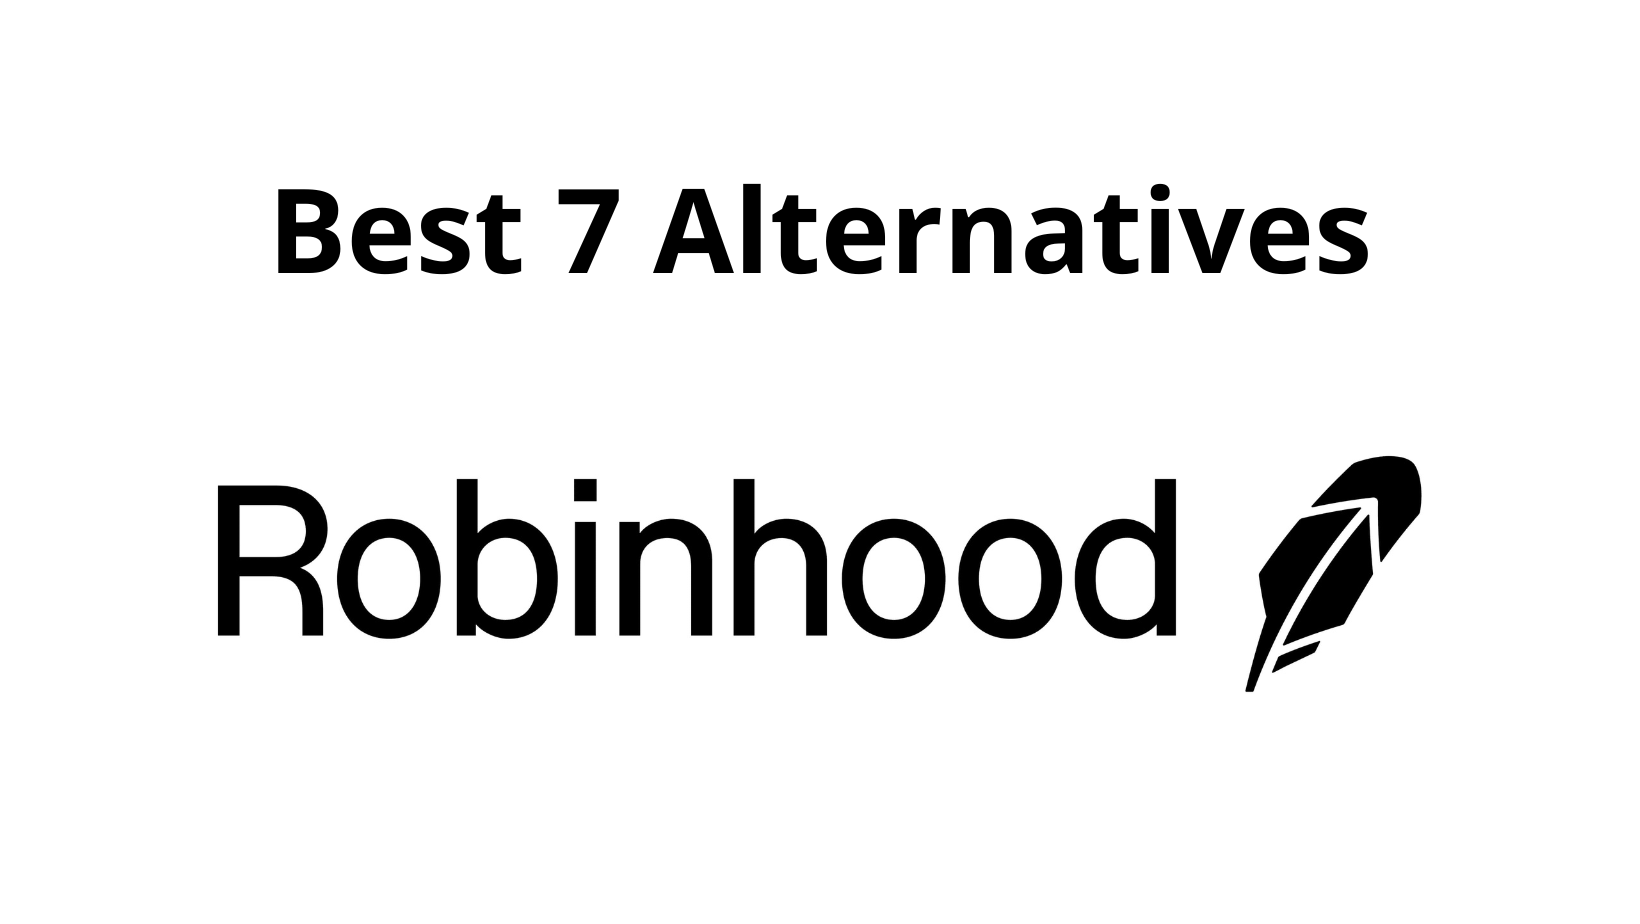 Best Robinhood Alternatives